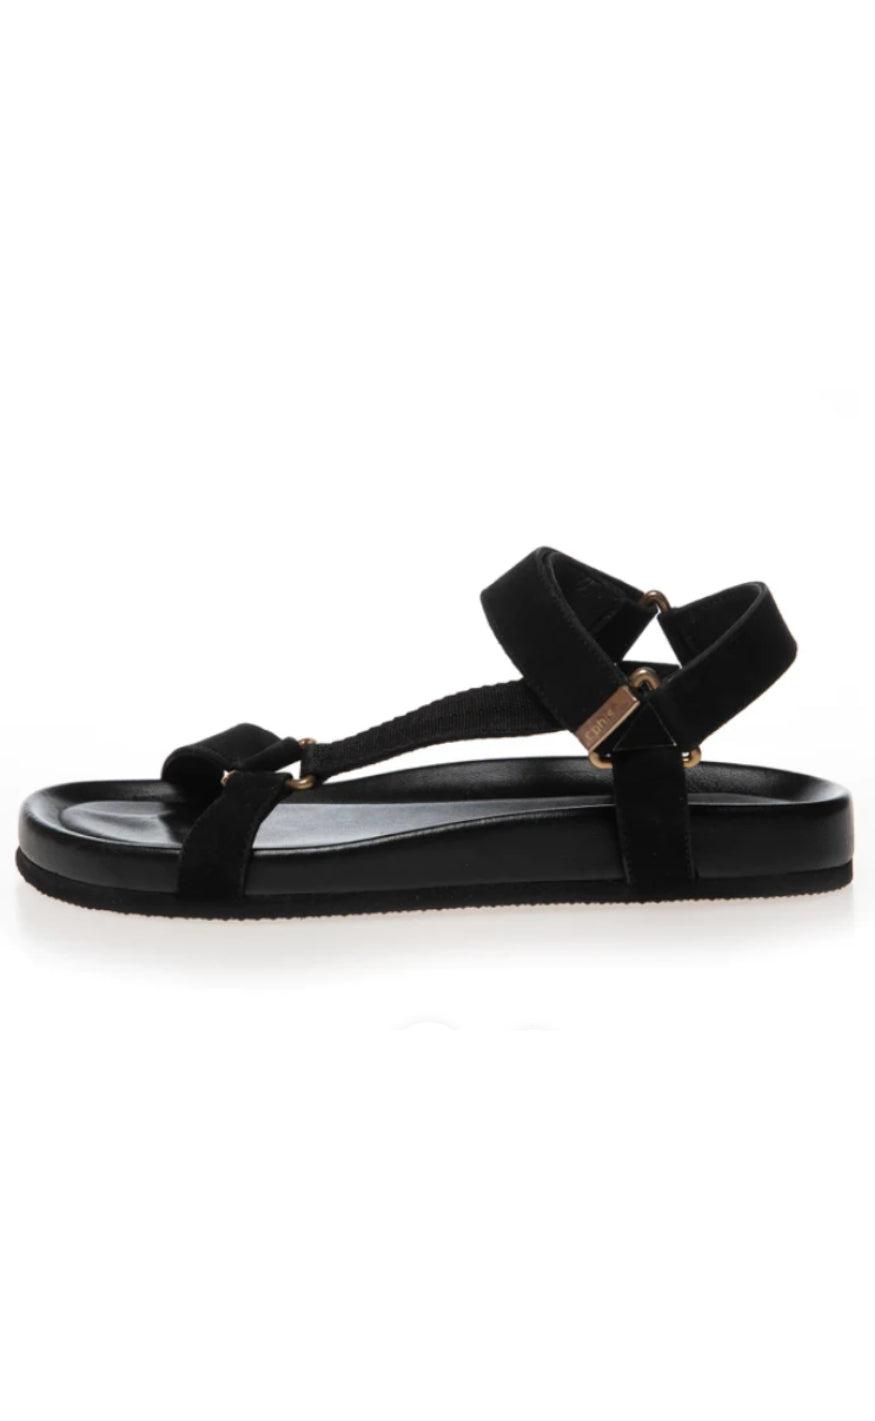 Se Copenhagen Shoes Sandaler - My Love - Black hos Fashionbystrand